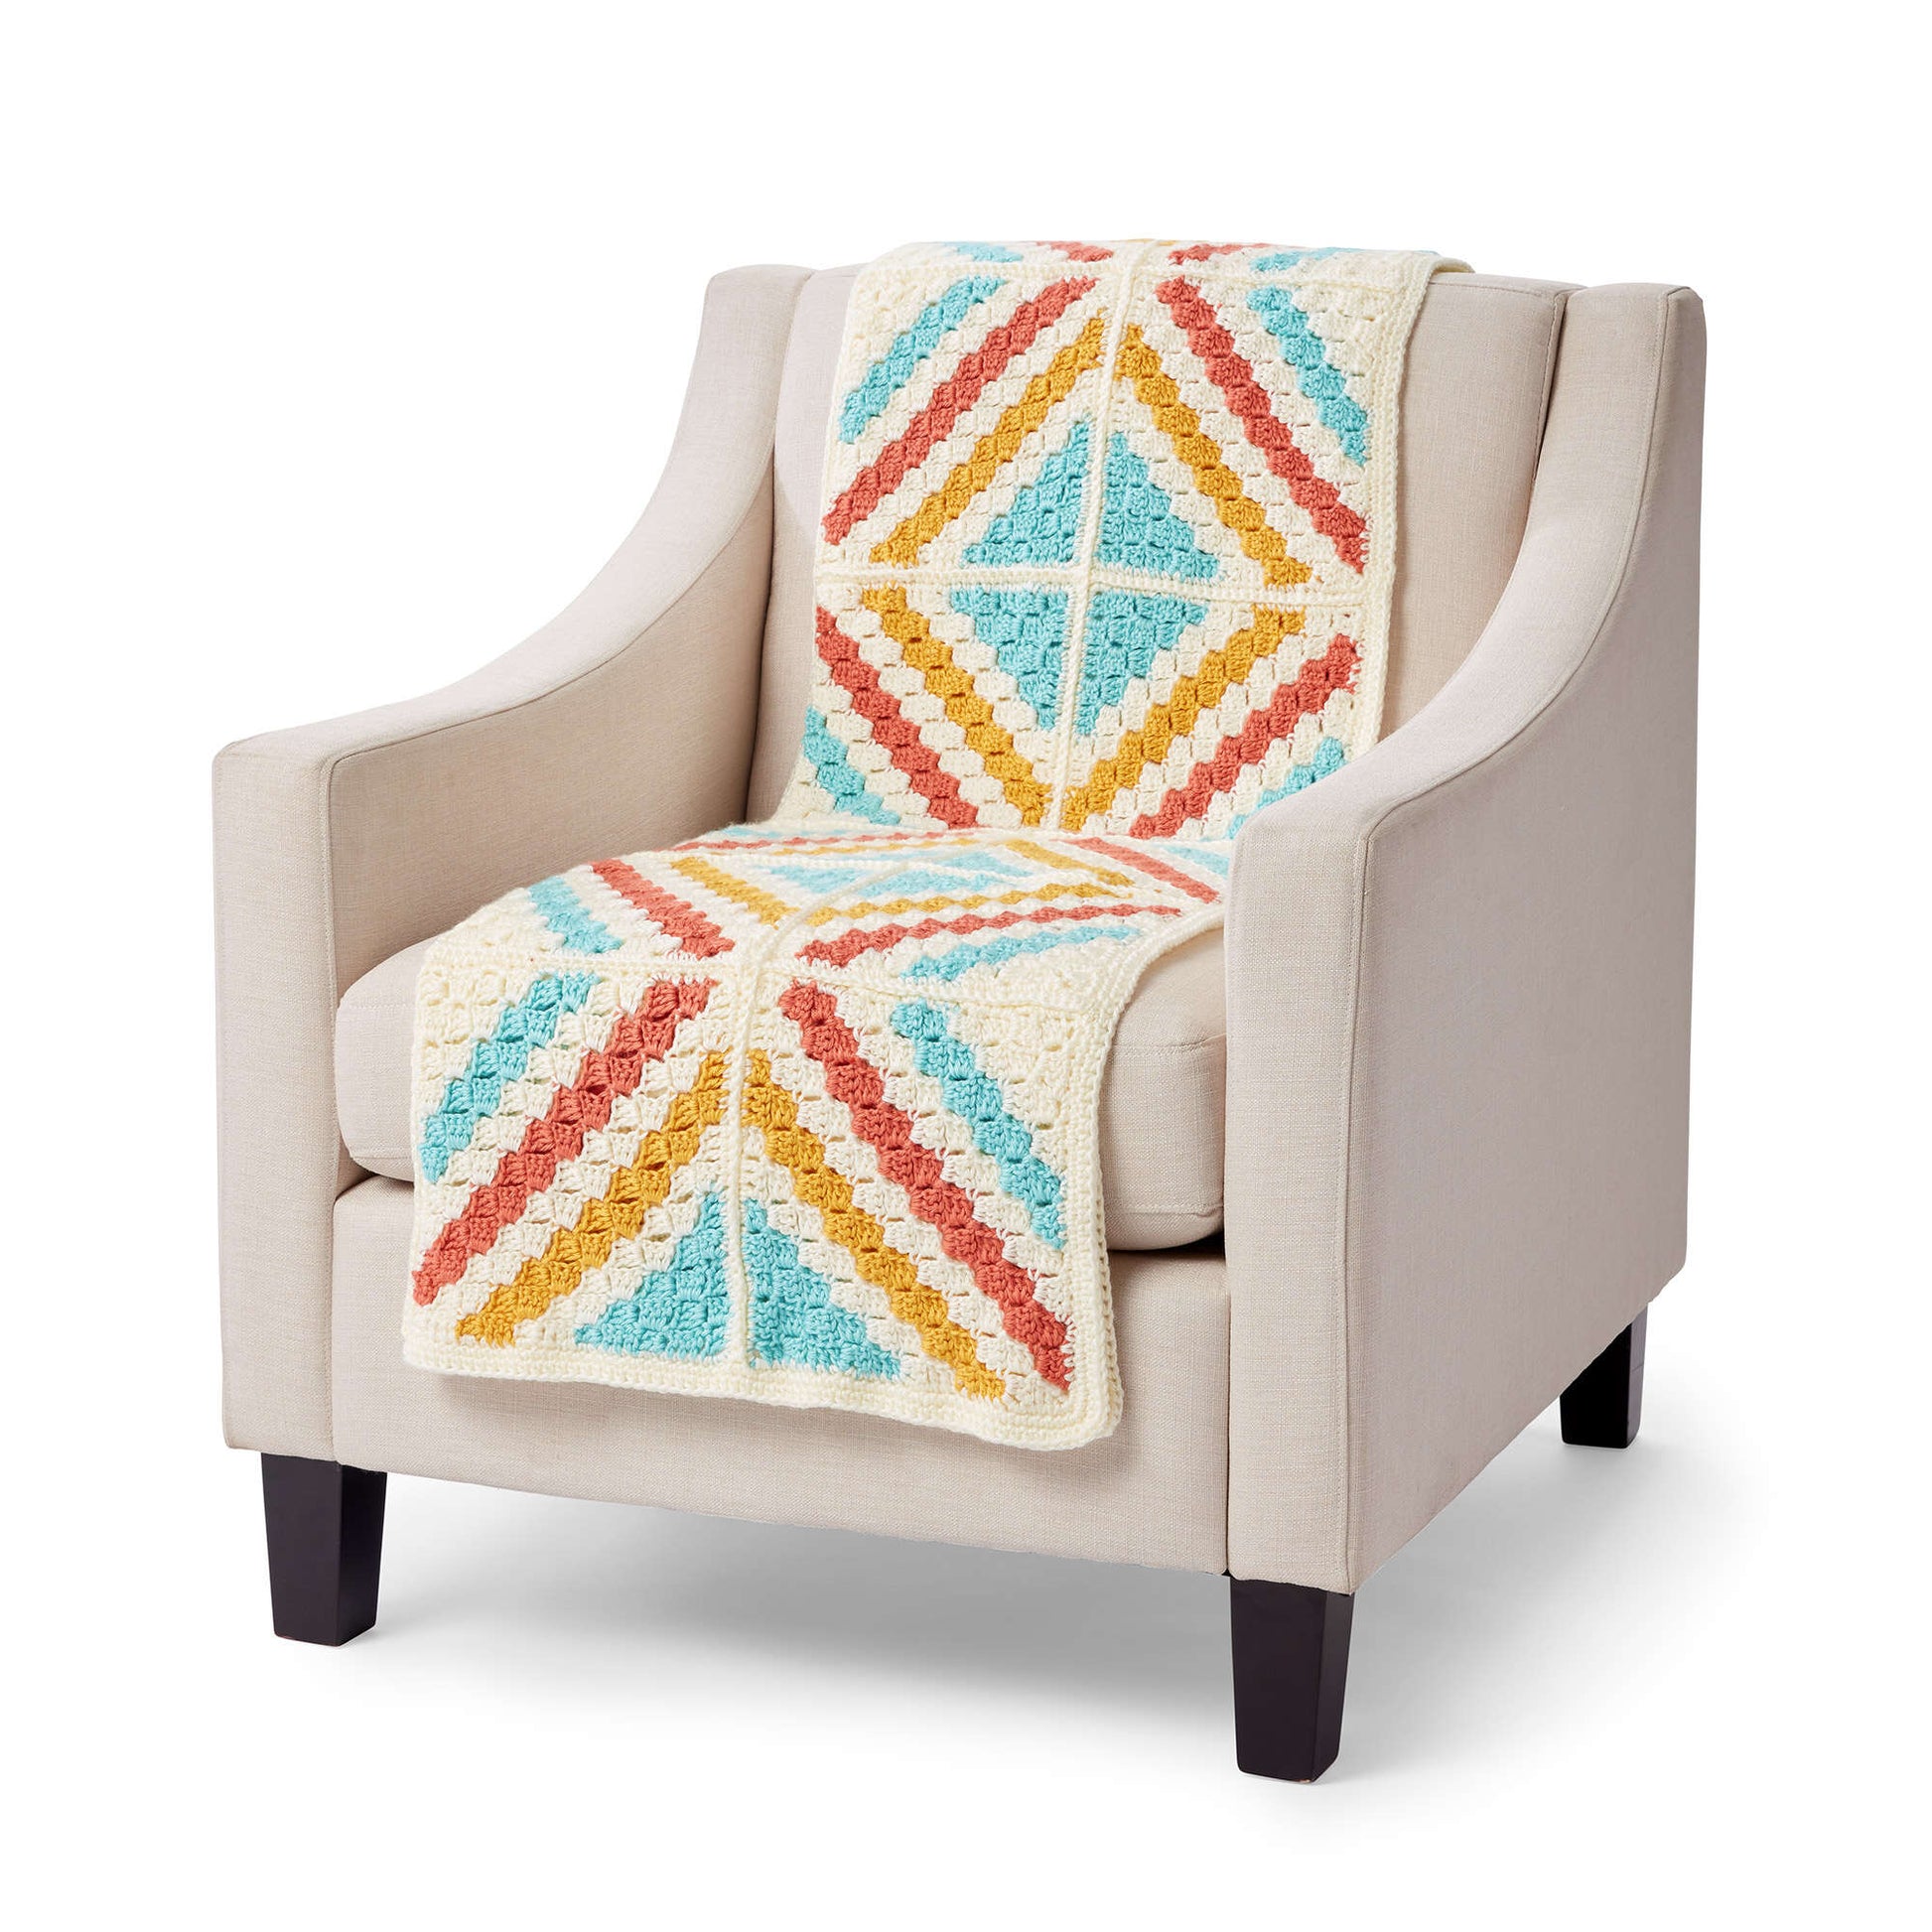 Free Caron Corner To Corner Crochet Motifs Blanket Pattern